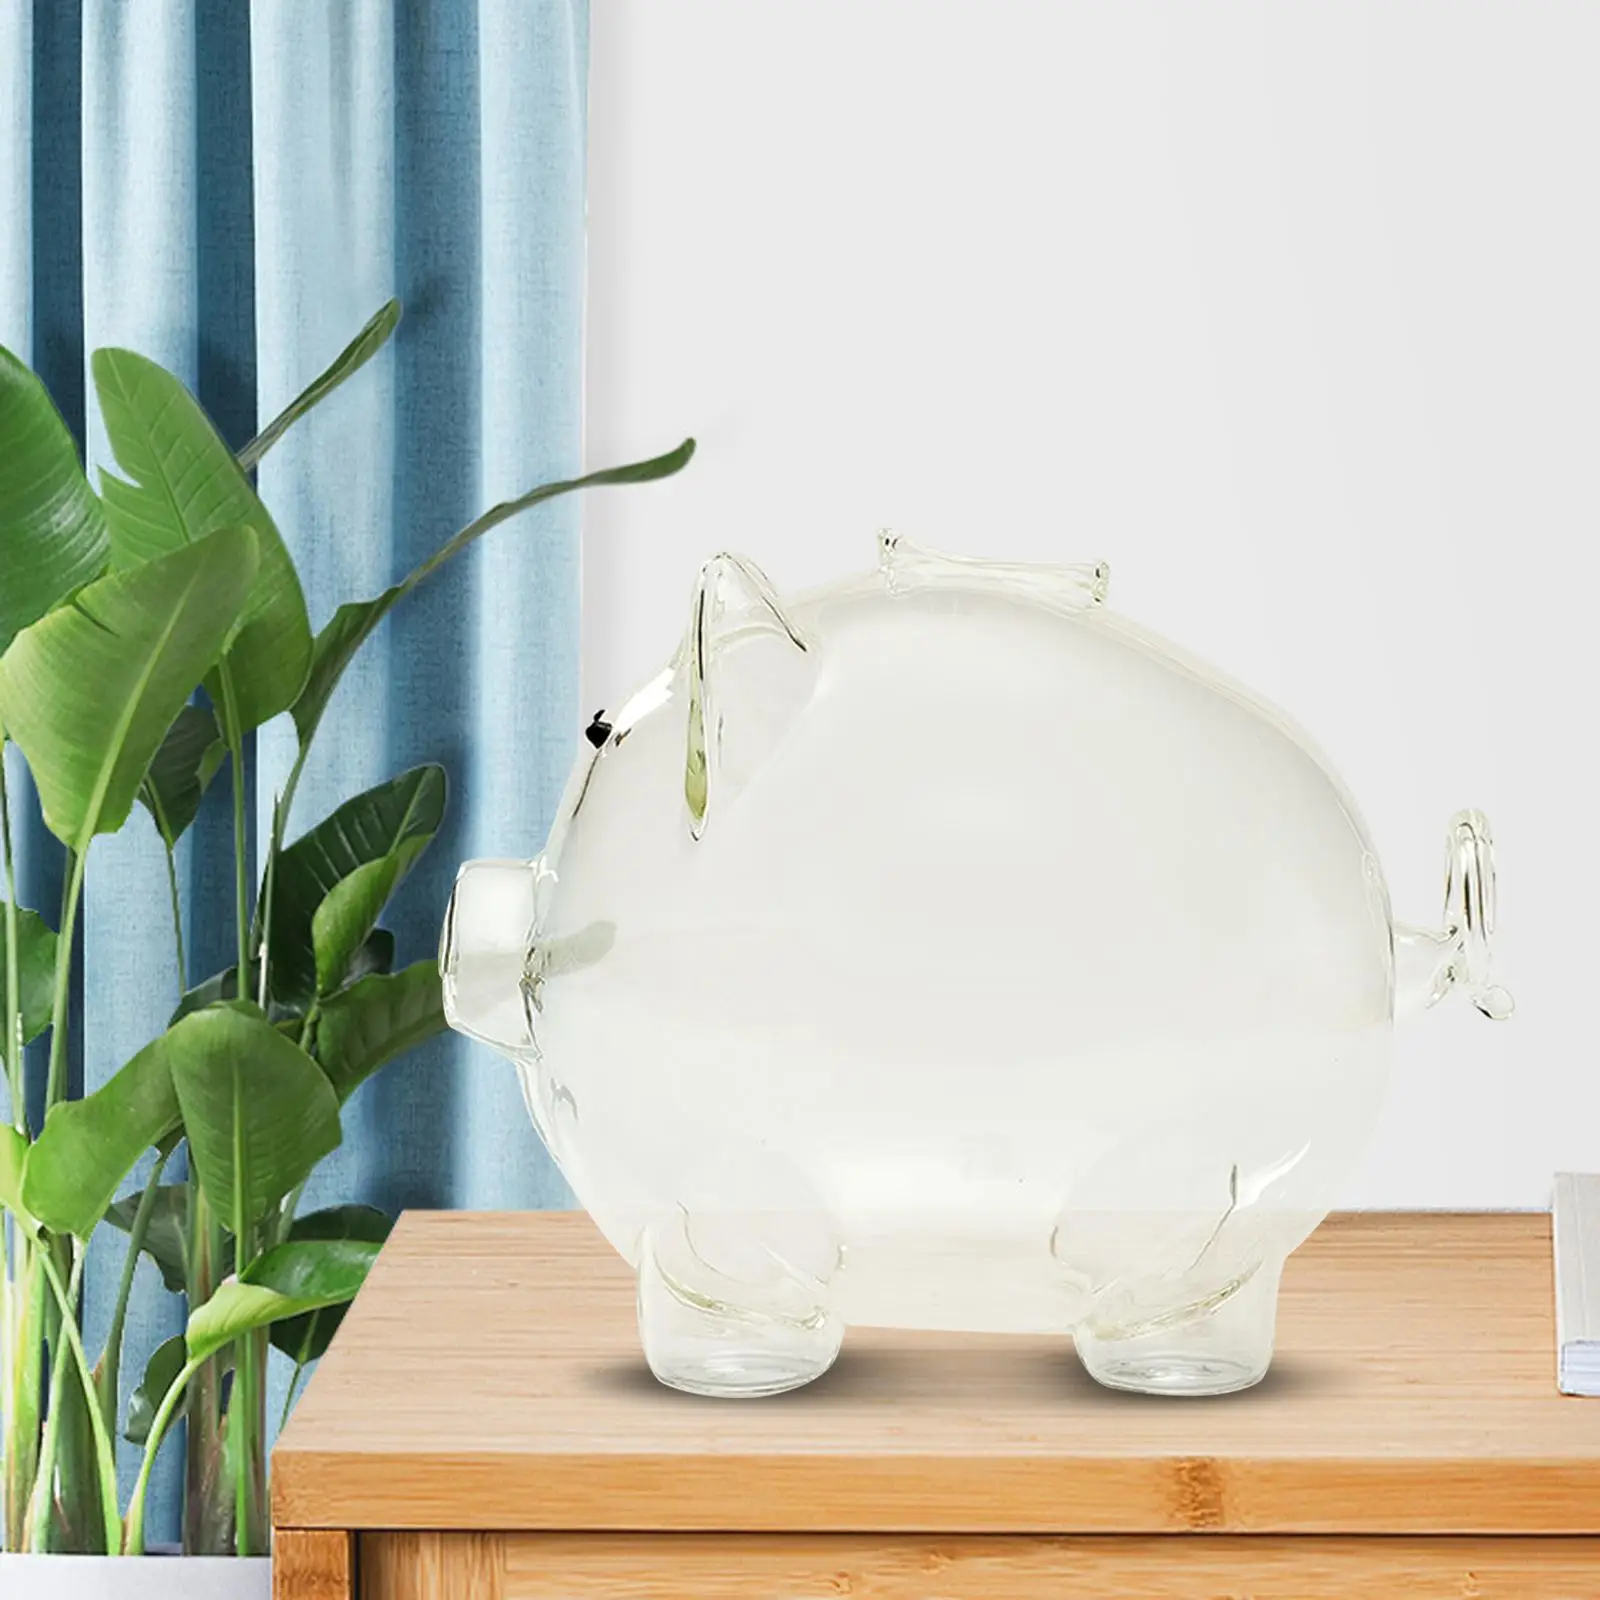 Glass Pig Piggy Bank Saving Box Sculpture Figurine Money Jar Animal Statue for Cabinet Festival Bedroom Living Room Decoration